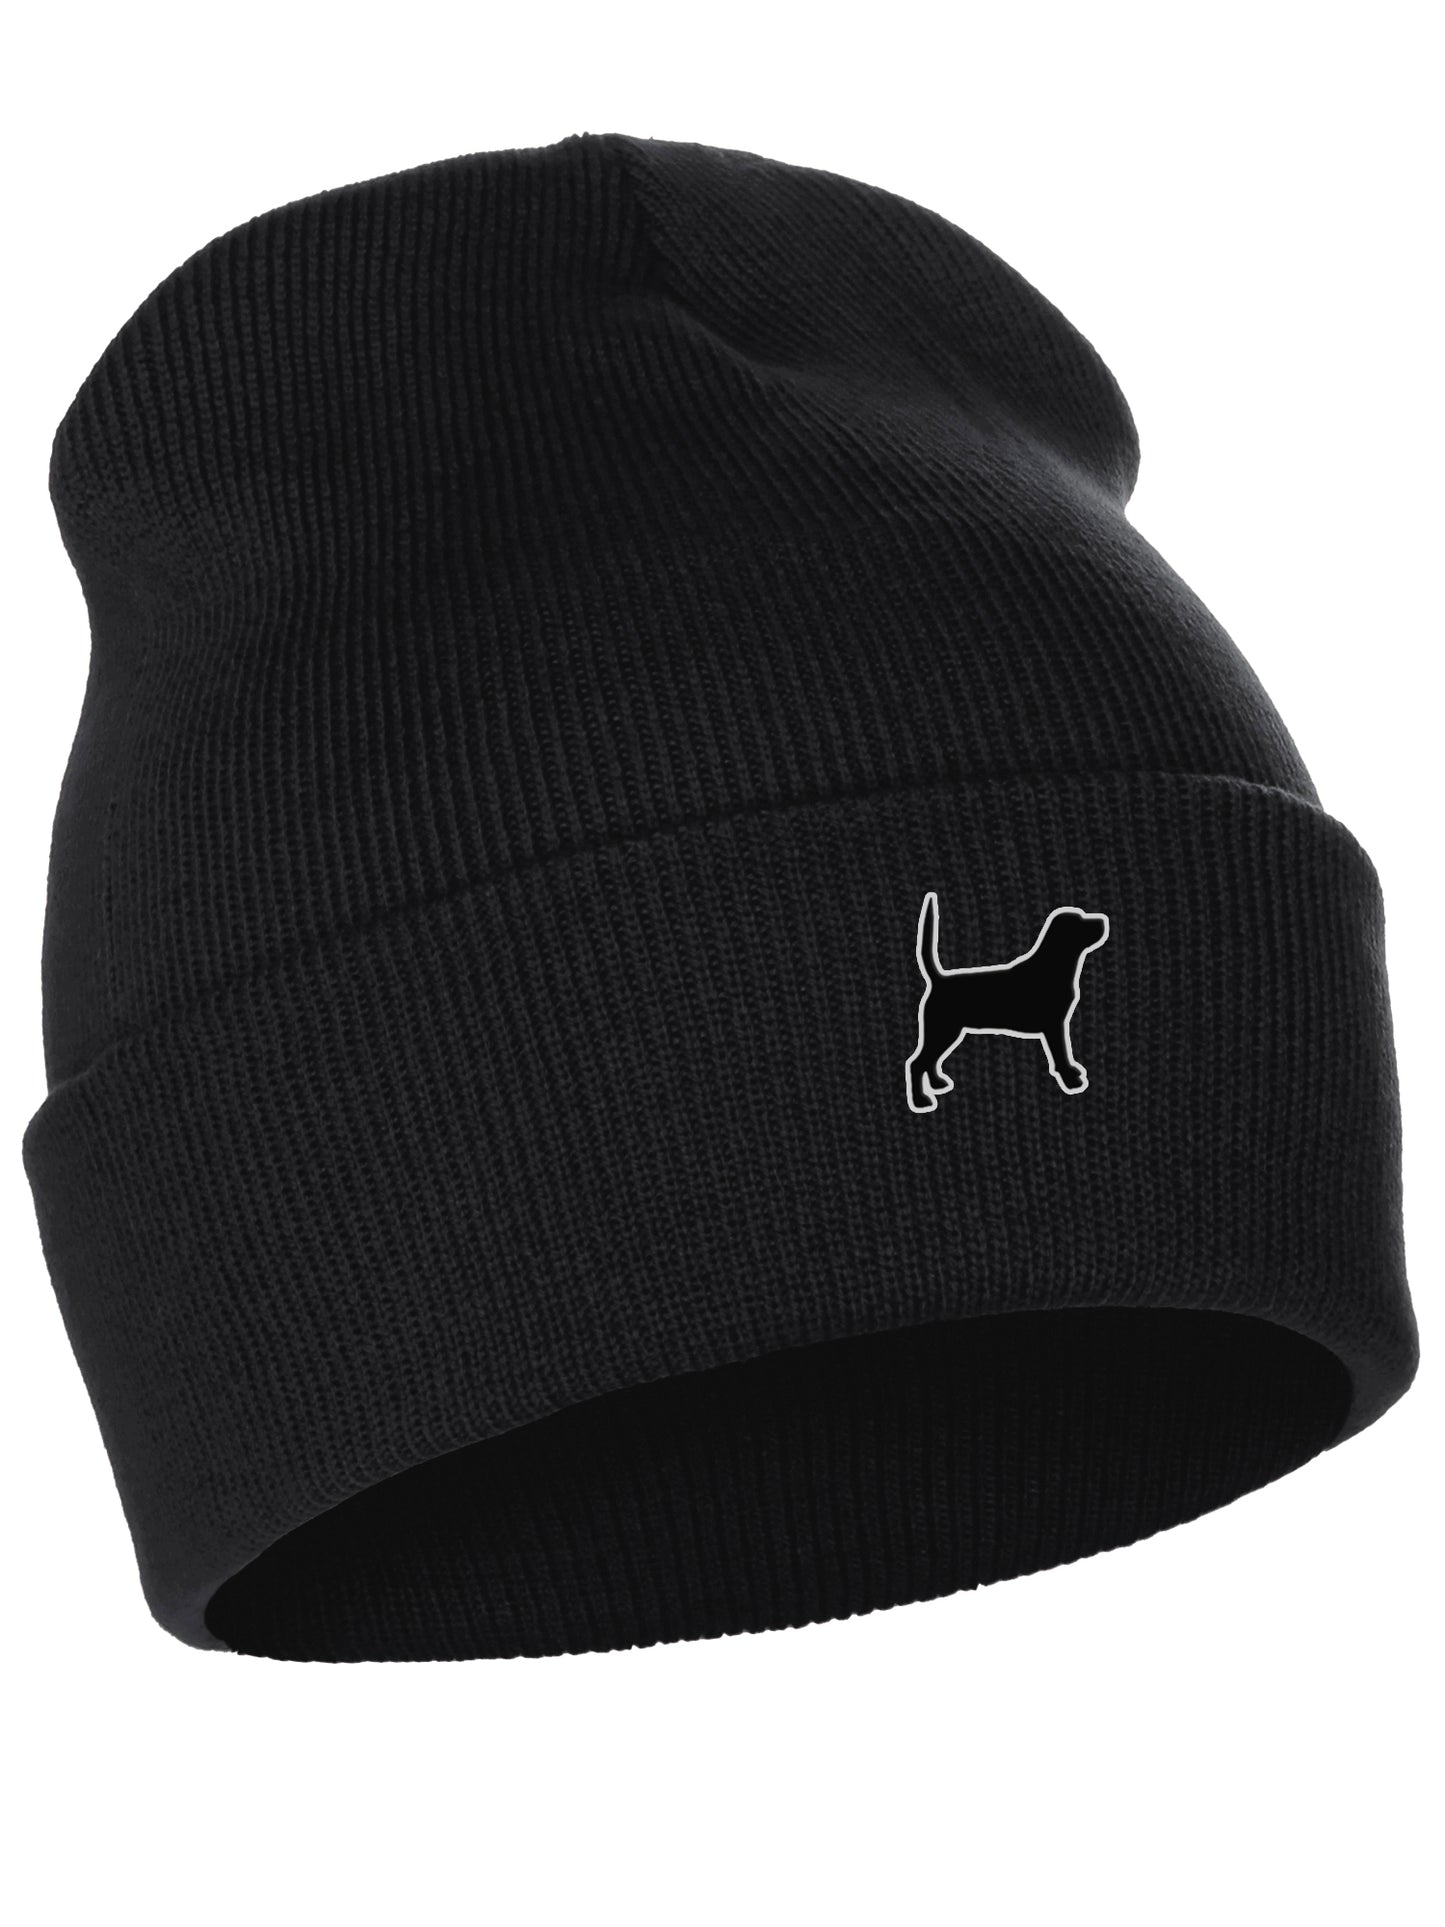 Daxton Dog Breeds Cuffed Beanie Winter Knit Hat Skully Cap